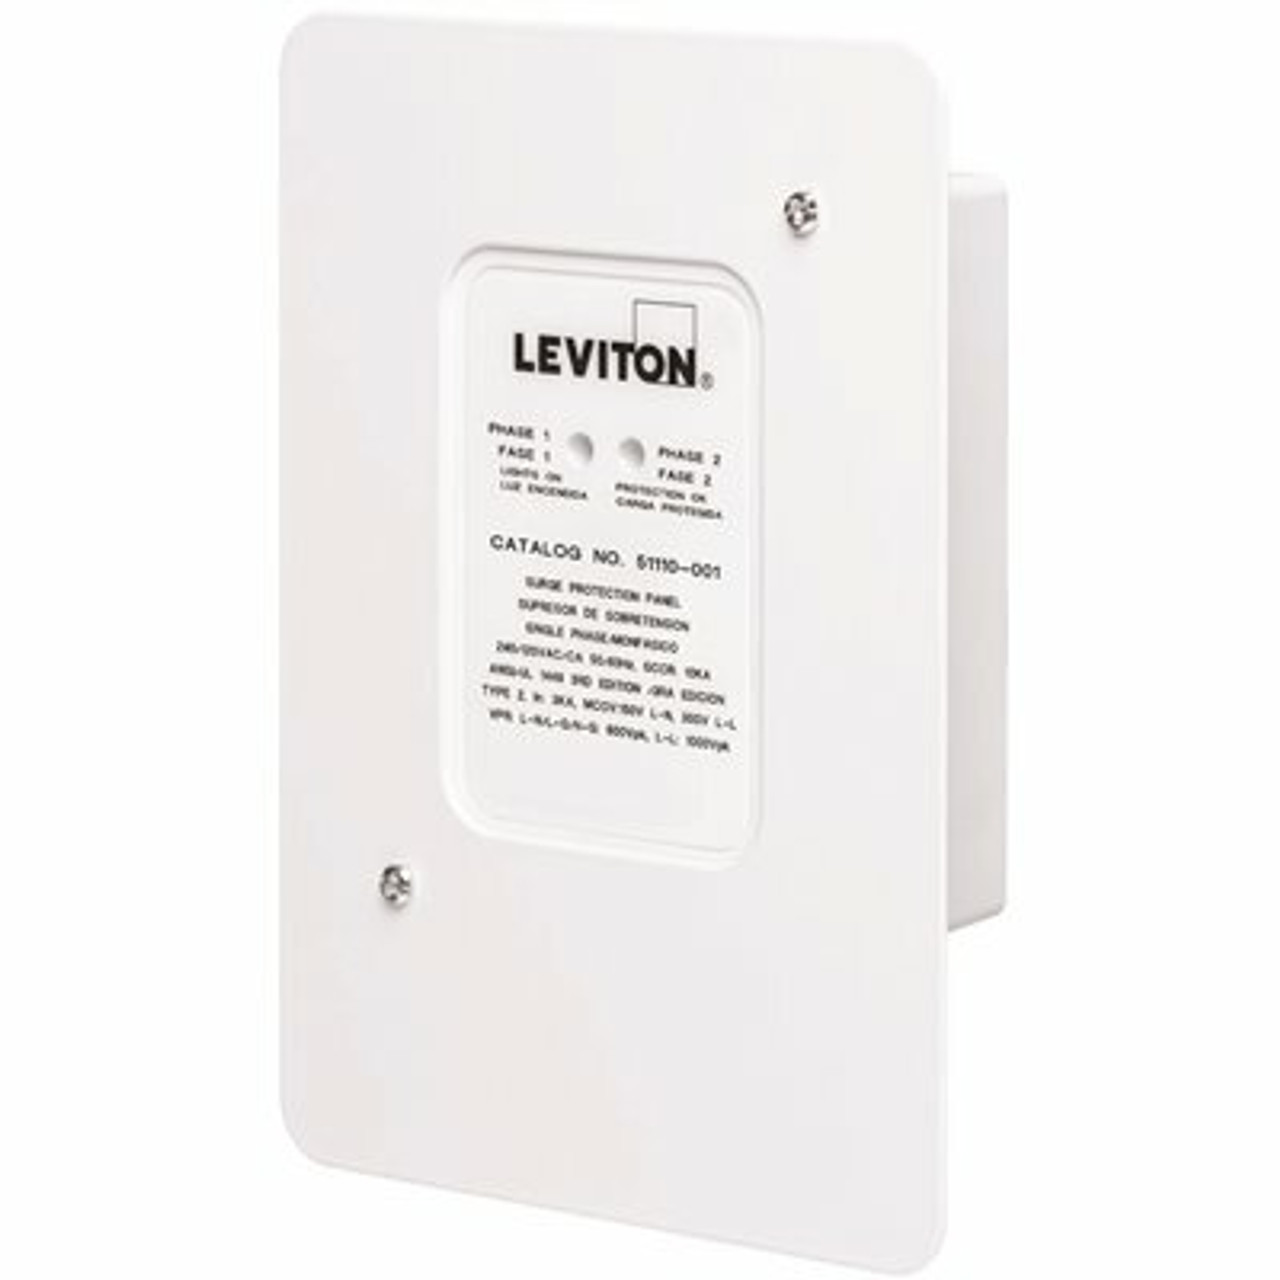 Leviton 120-Volt/240-Volt Residential Whole House Surge Protector